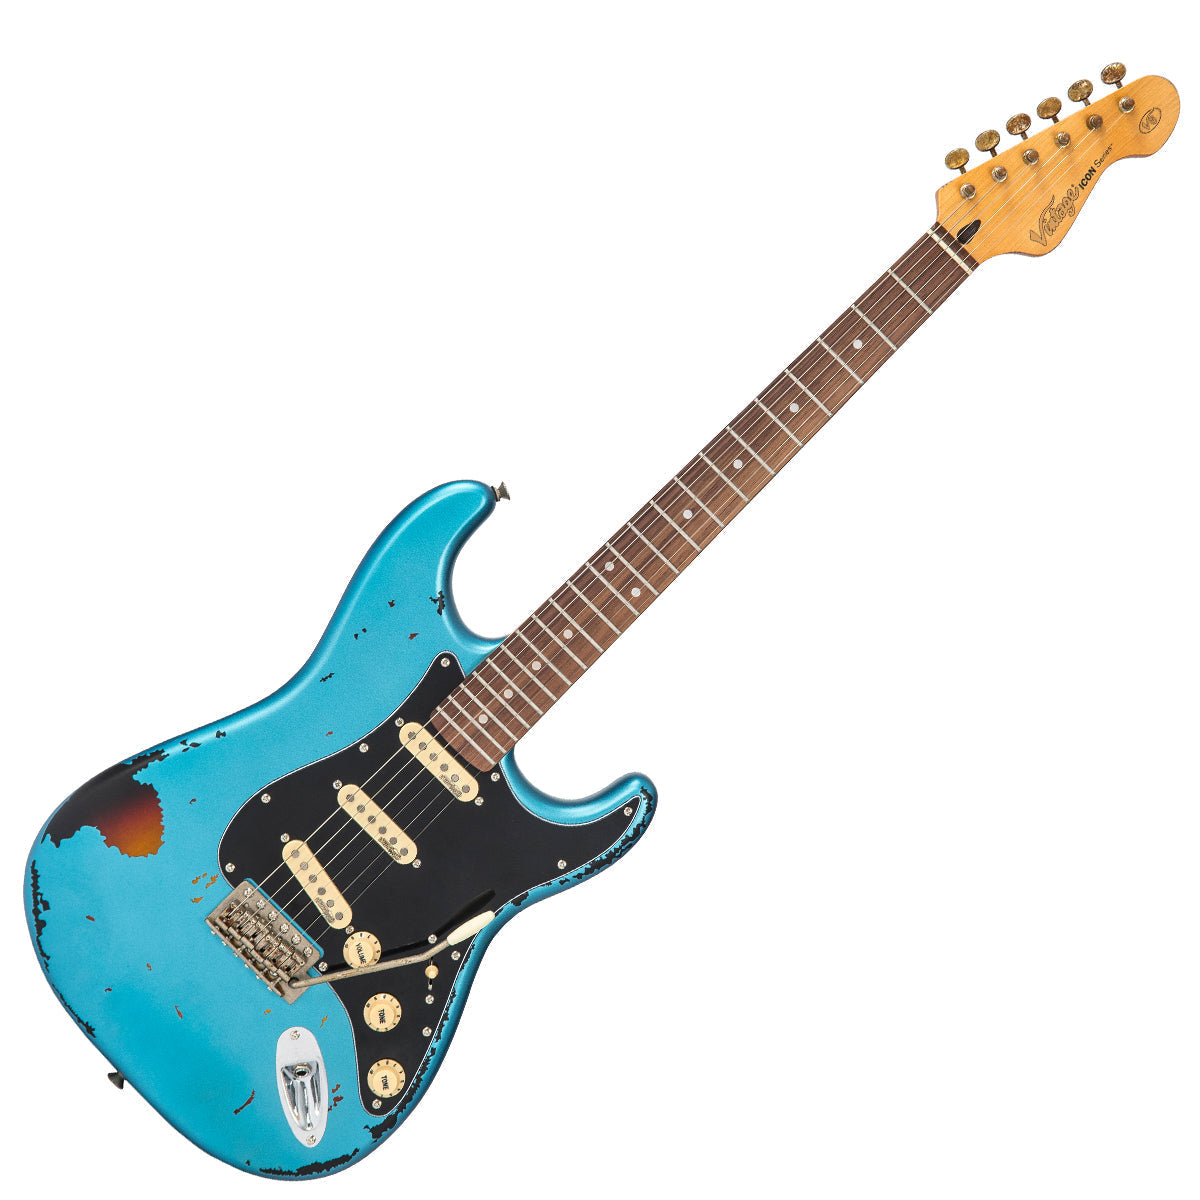 Vintage V6 ICON Electric Guitar ~ Distressed Gun Hill Blue Over Sunburst, Electric Guitar for sale at Richards Guitars.